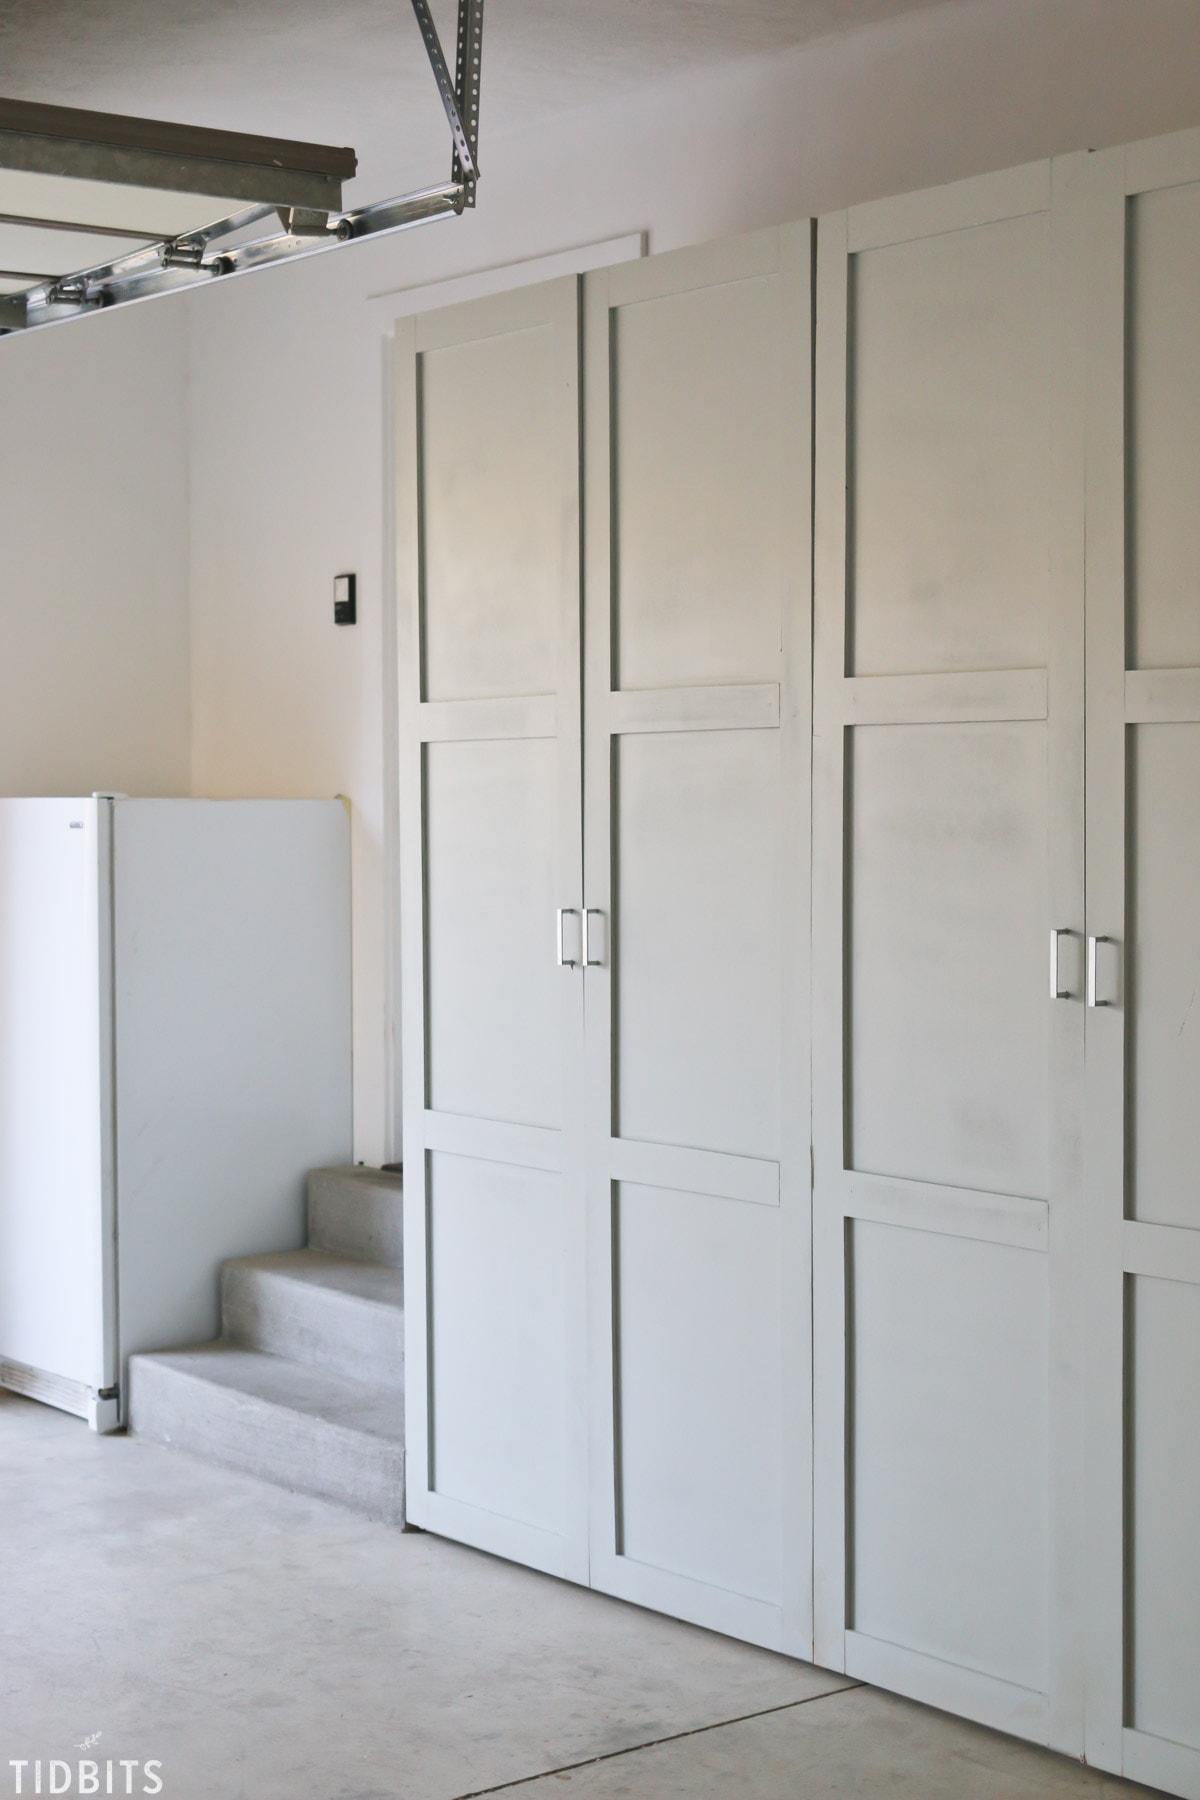 Garage Storage Cabinets Free Building, Storage Cabinet For Garage With Doors